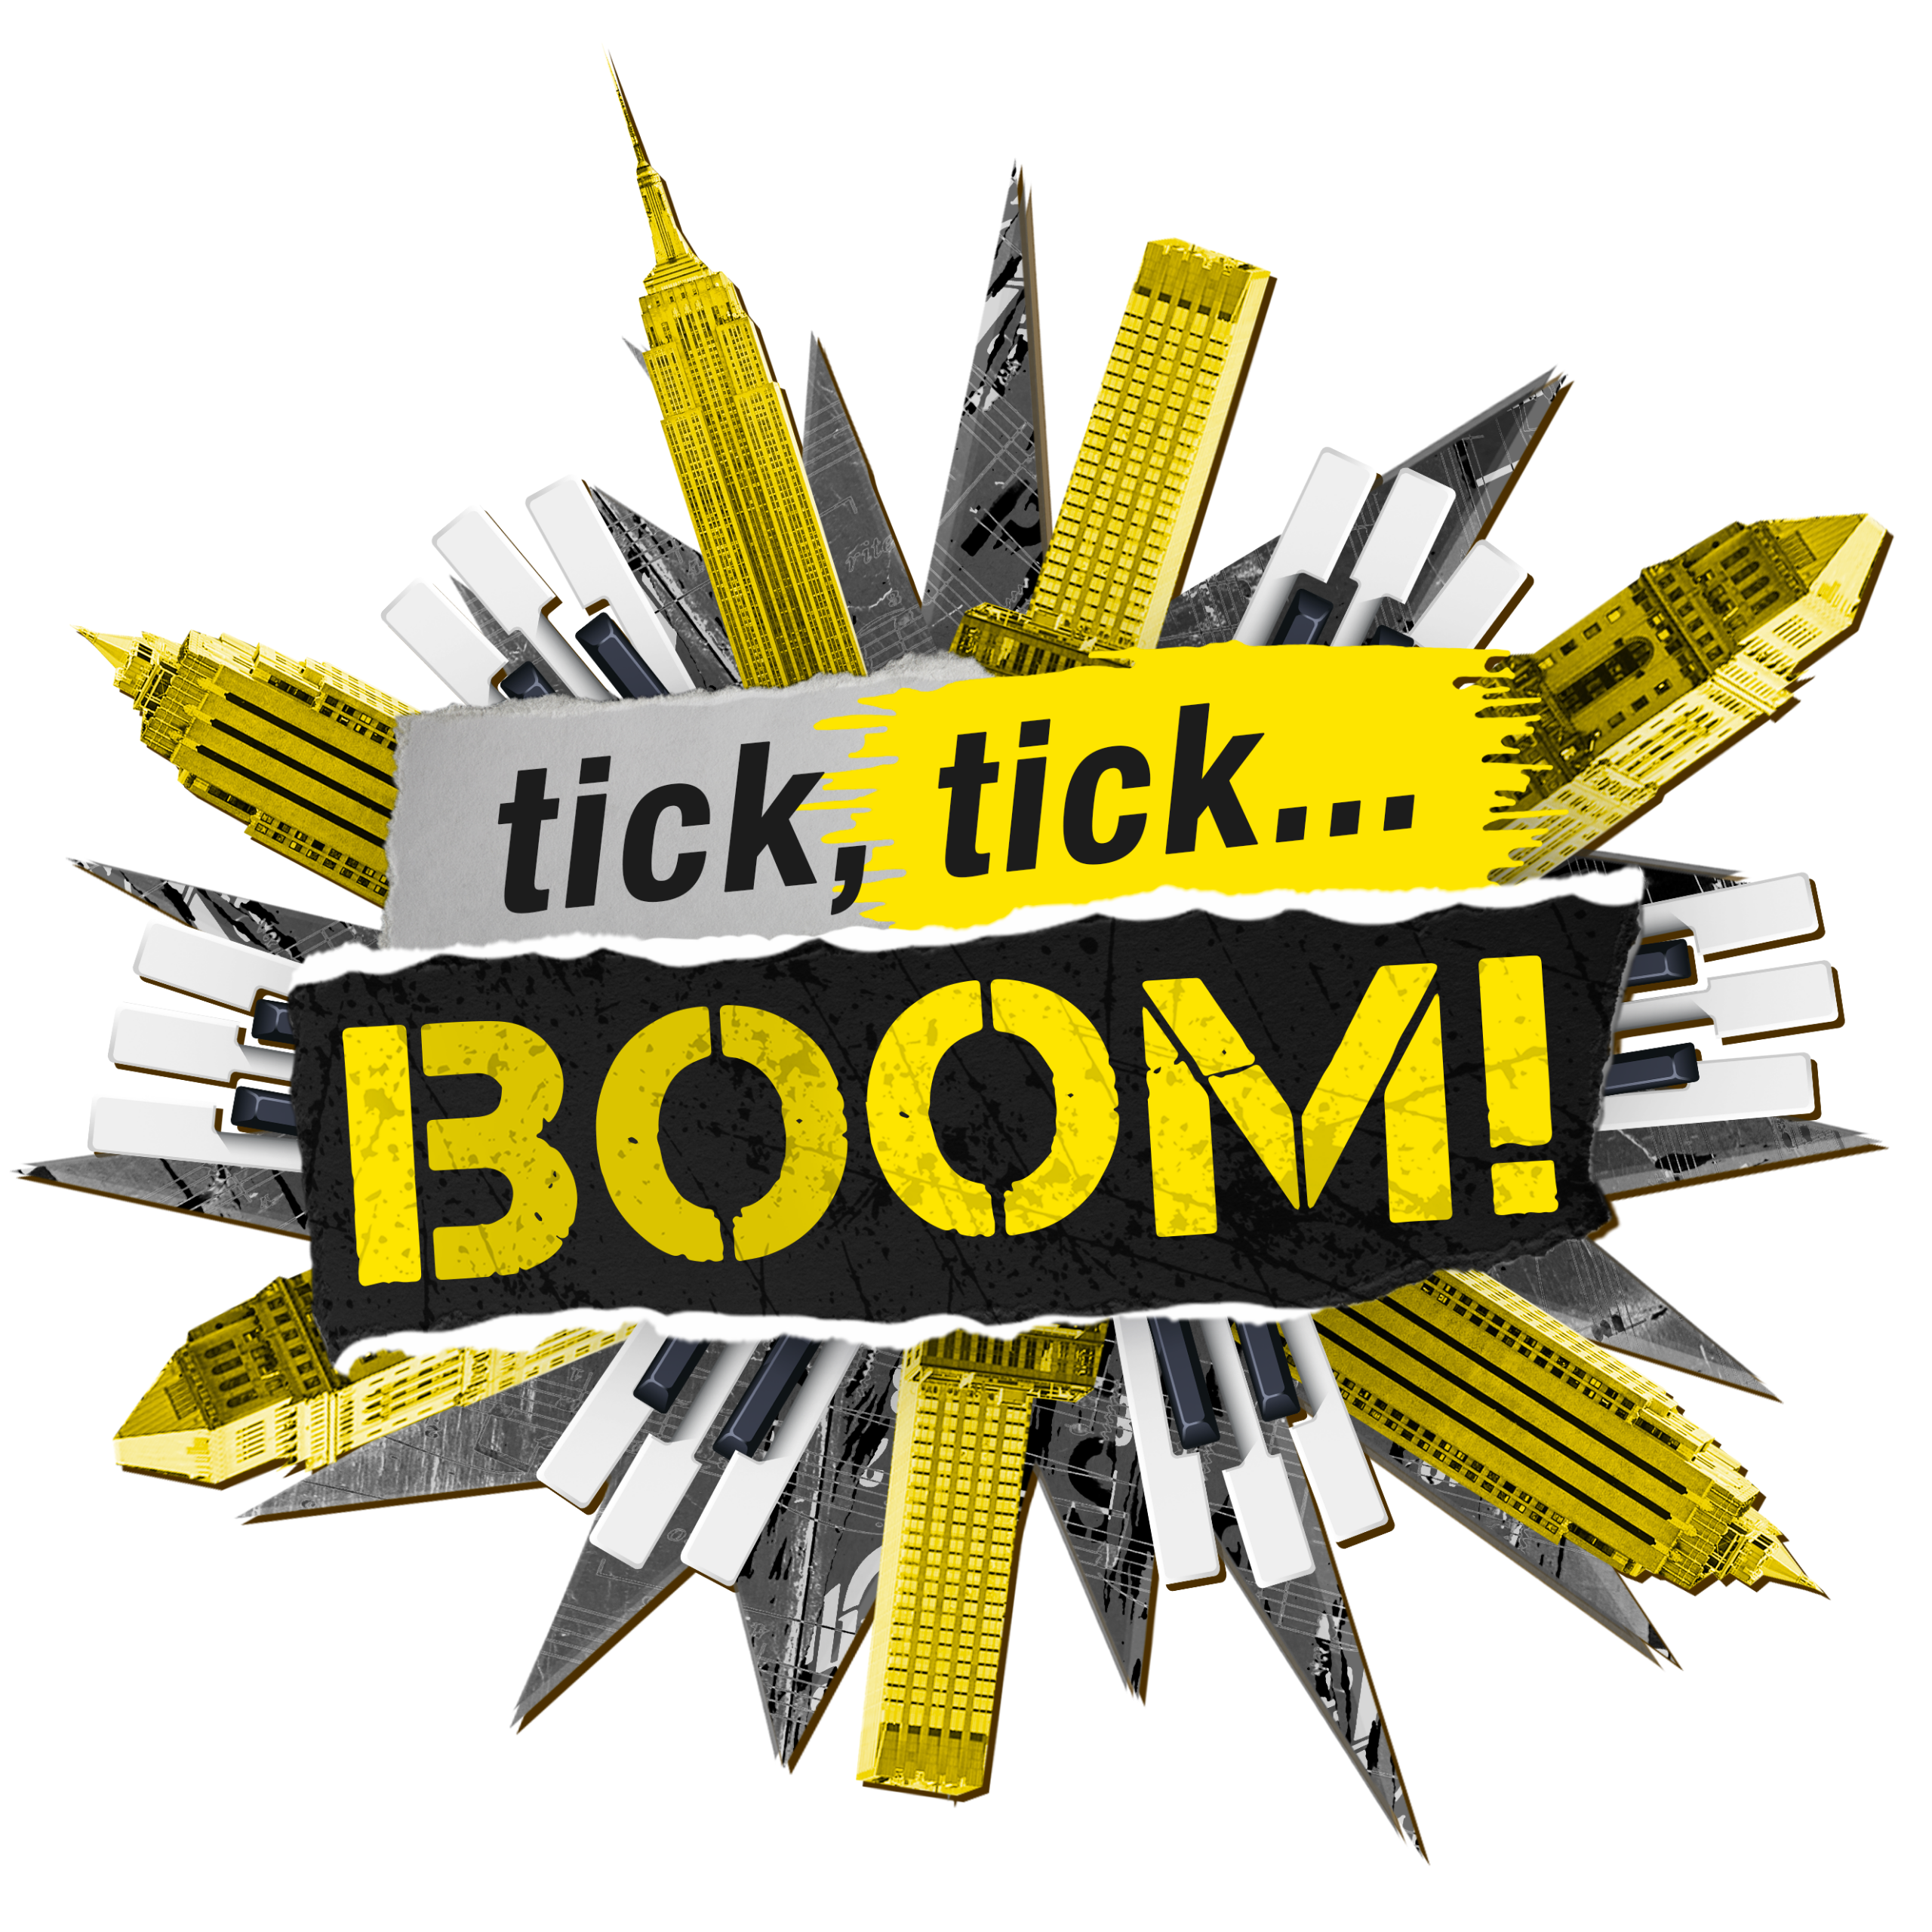 Tick, Tick...Boom!, a musical by Jonathan Larson